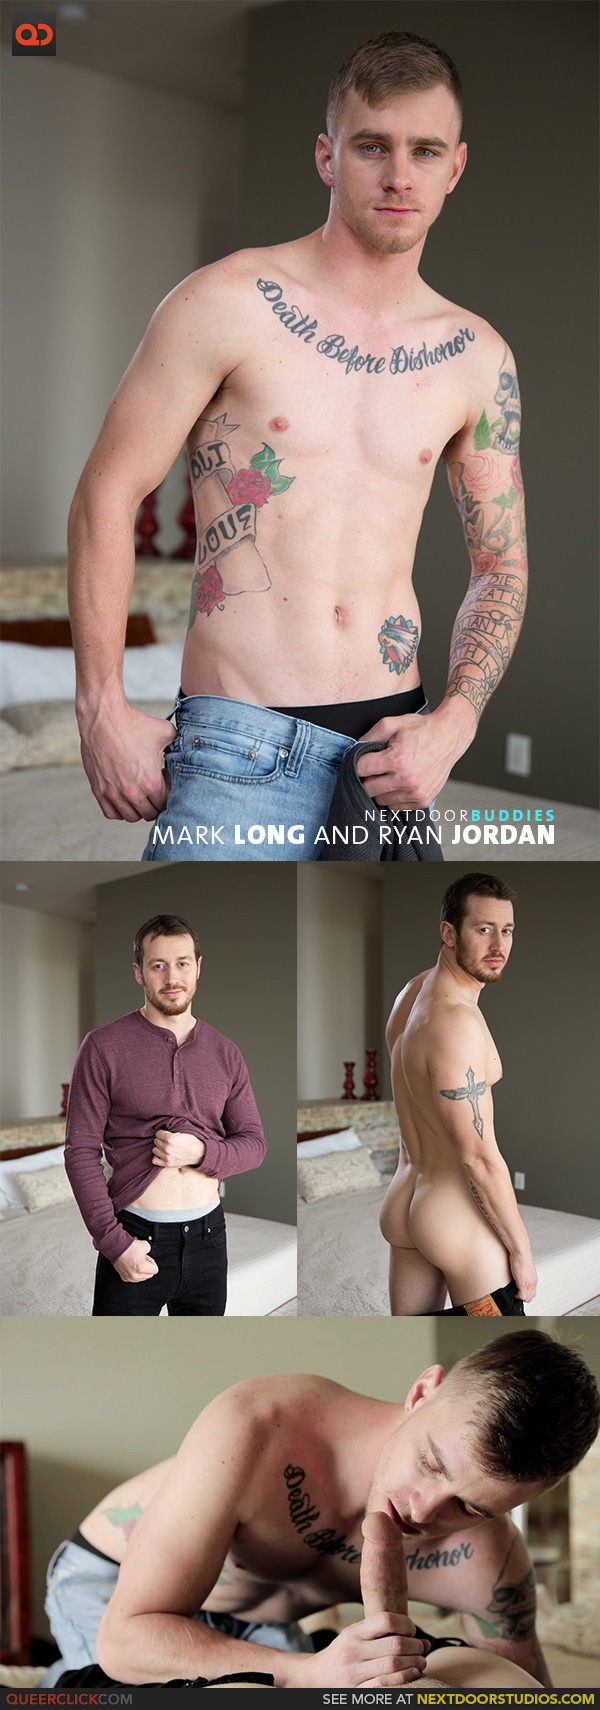 Next Door Studios:  Mark Long and Ryan Jordan